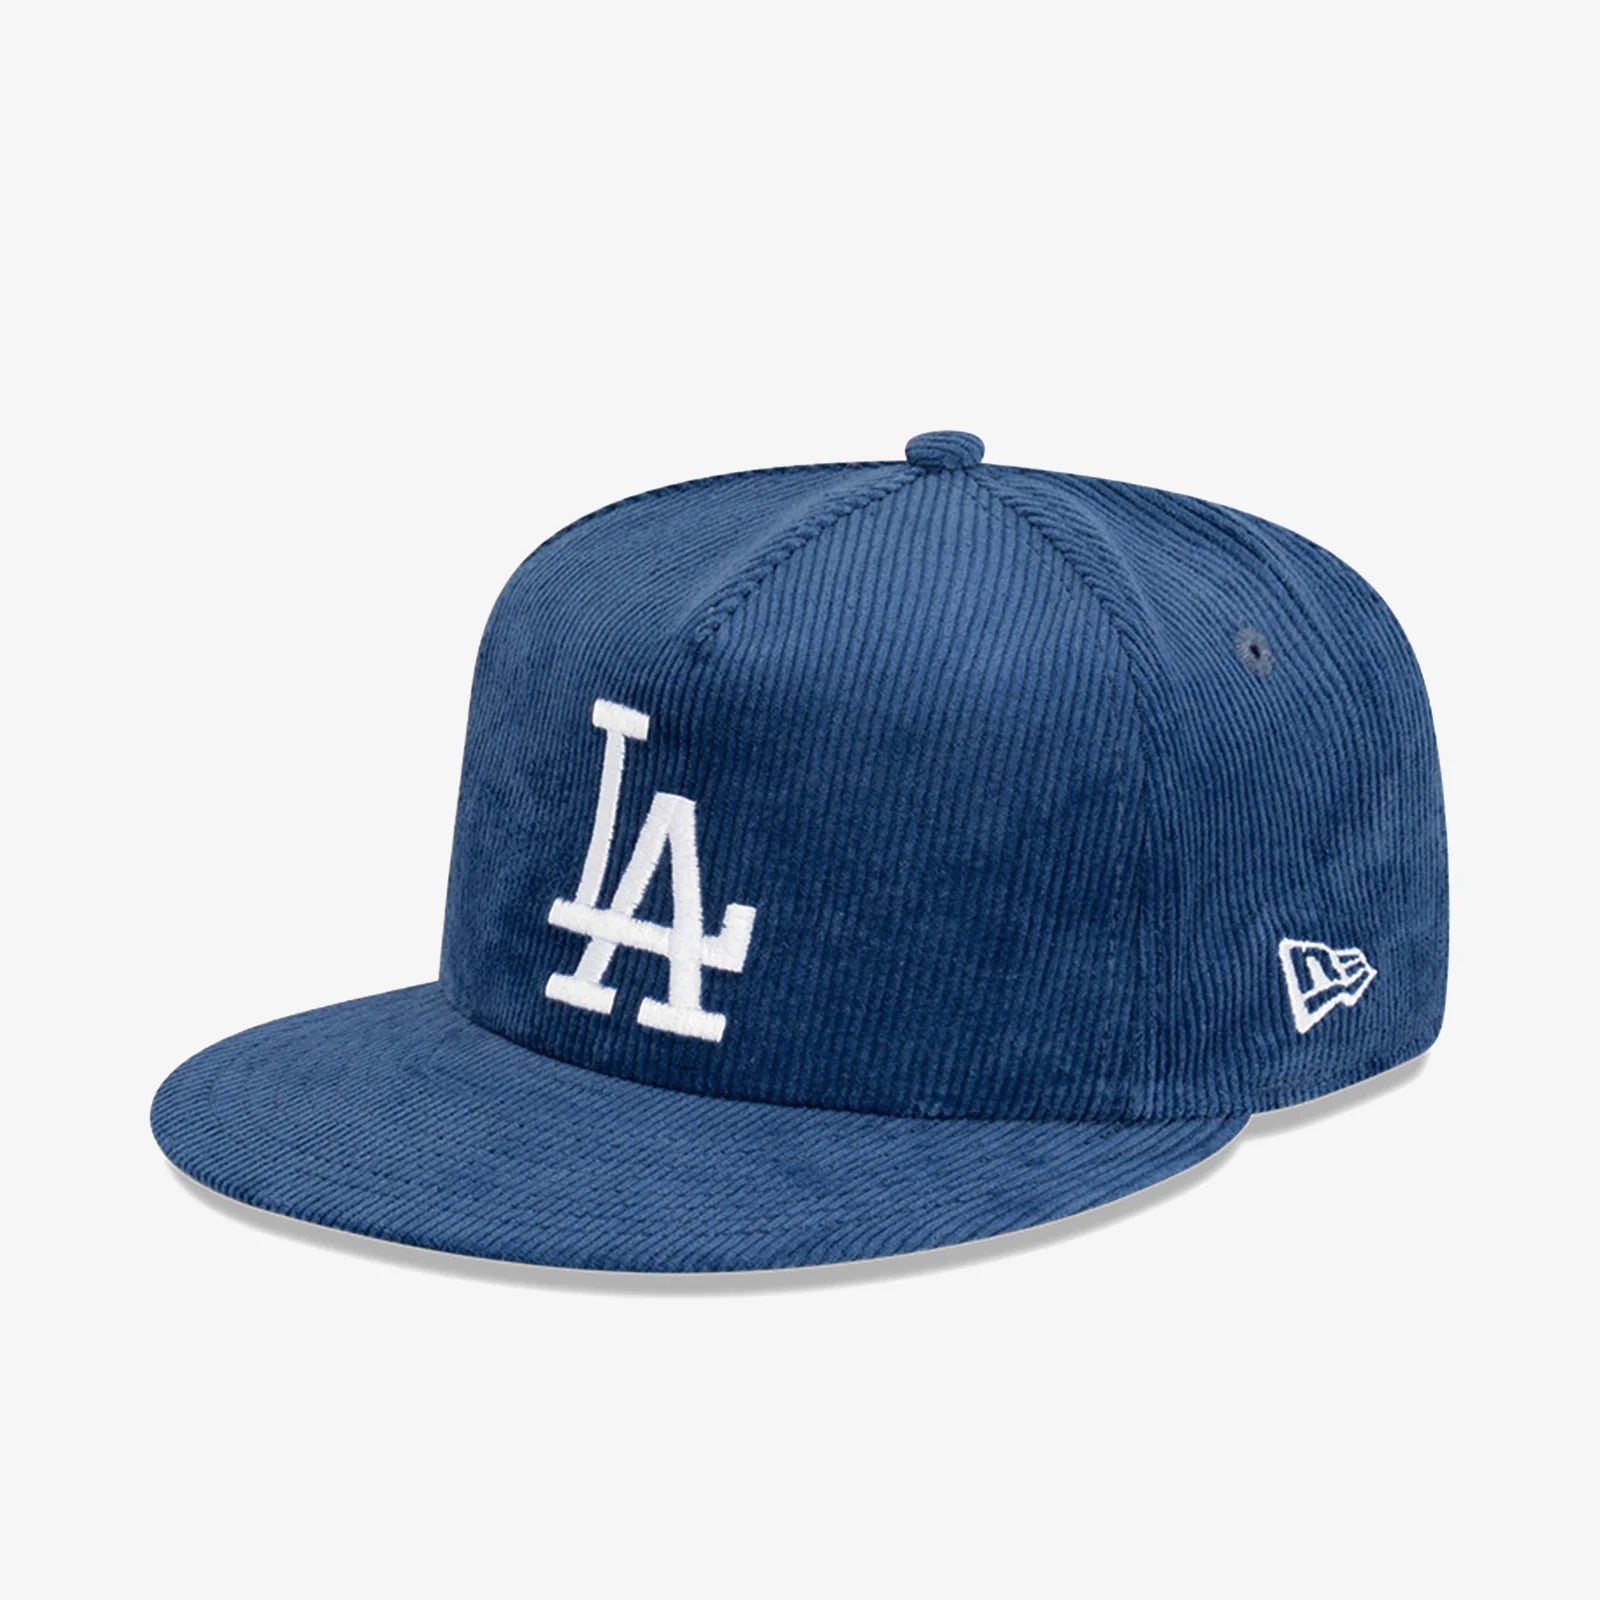 LA Dodgers Hat - The Golfer Blue Corduroy MLB Snapback Cap - New Era